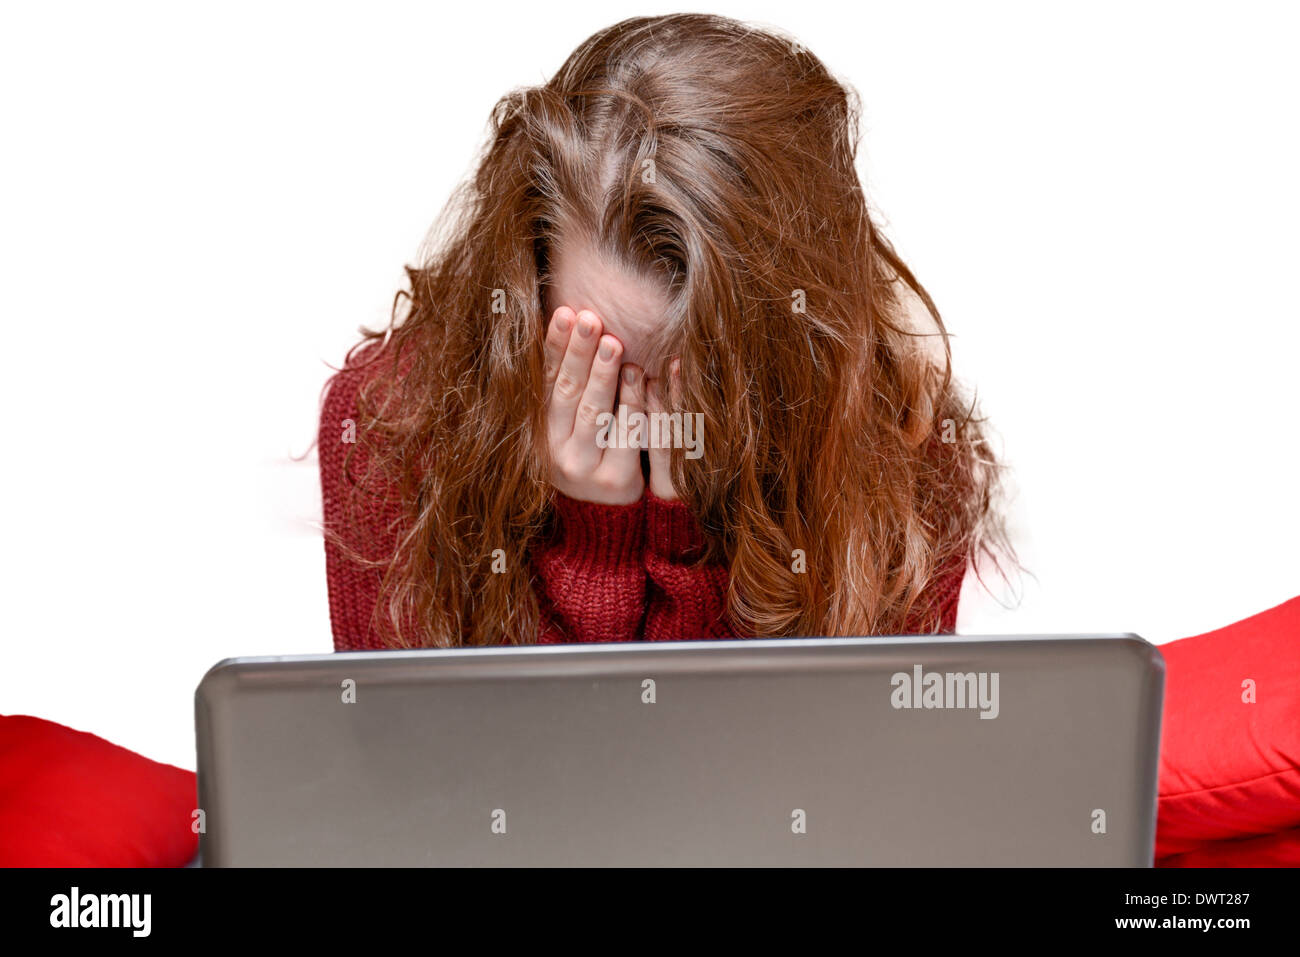 Teenager at a computer Stock Photo